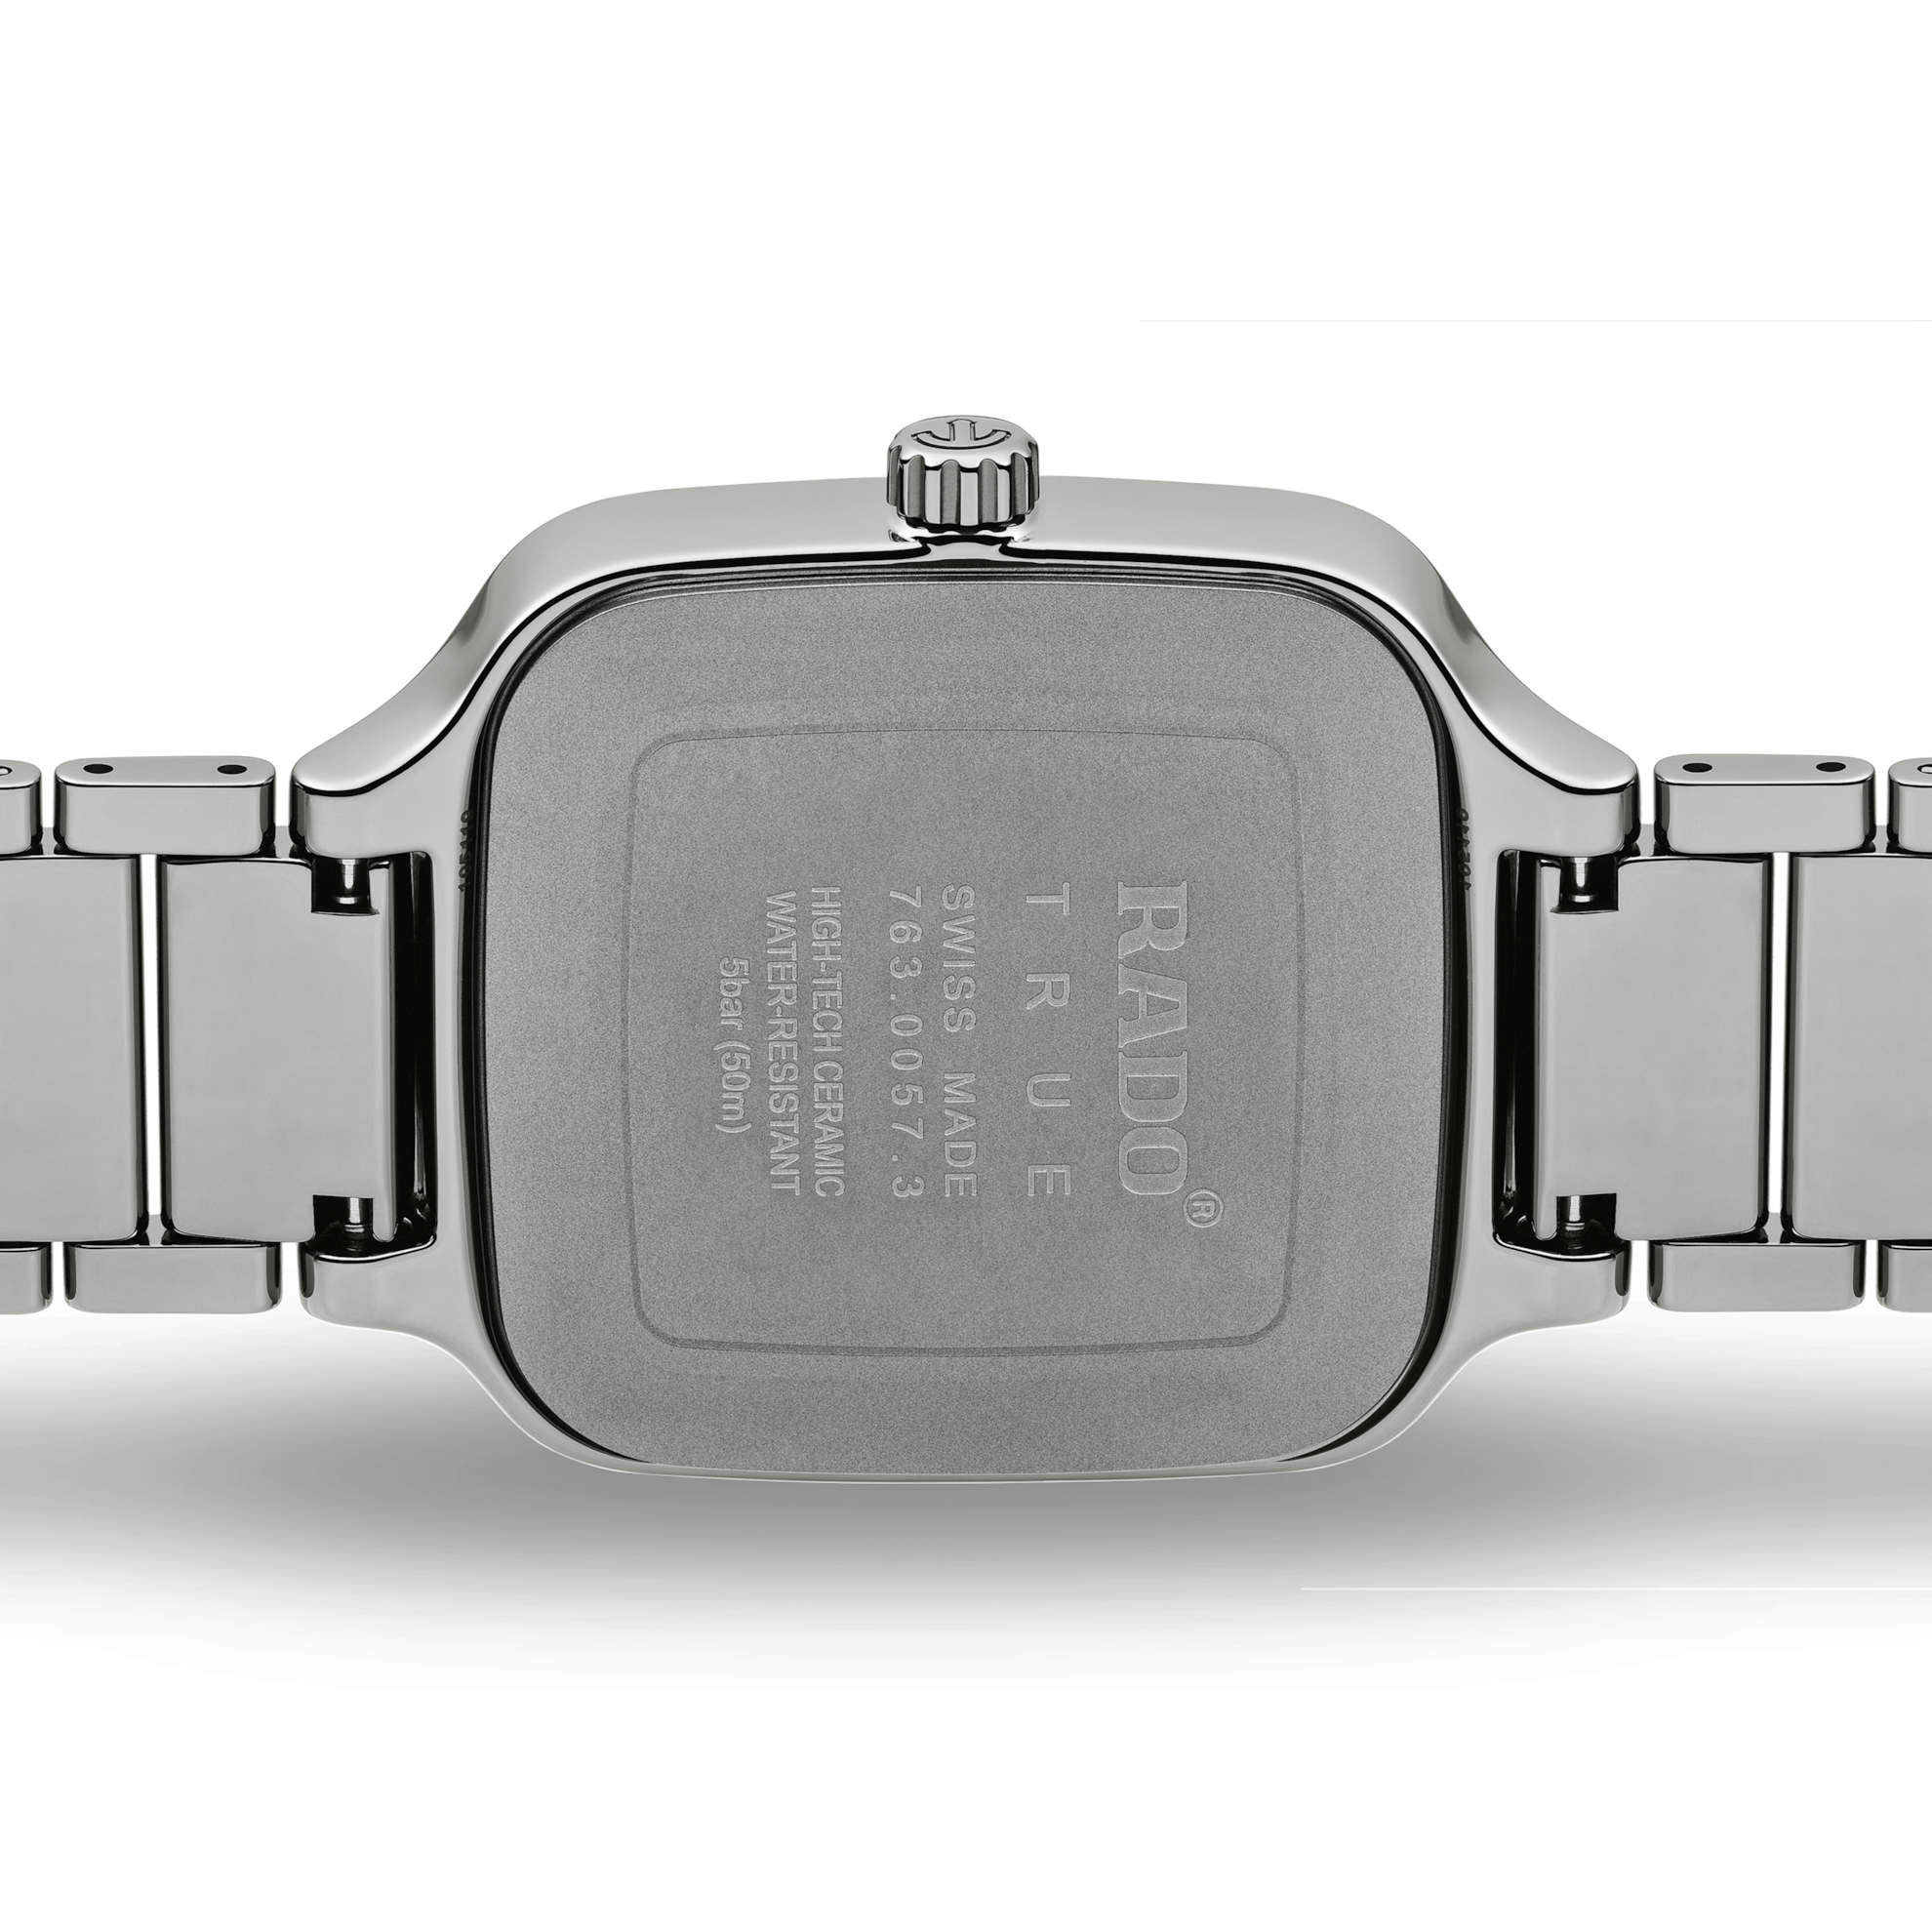 Rado True Square Automatic Diamonds Ceramic Unisex Watch - Kamal Watch Company